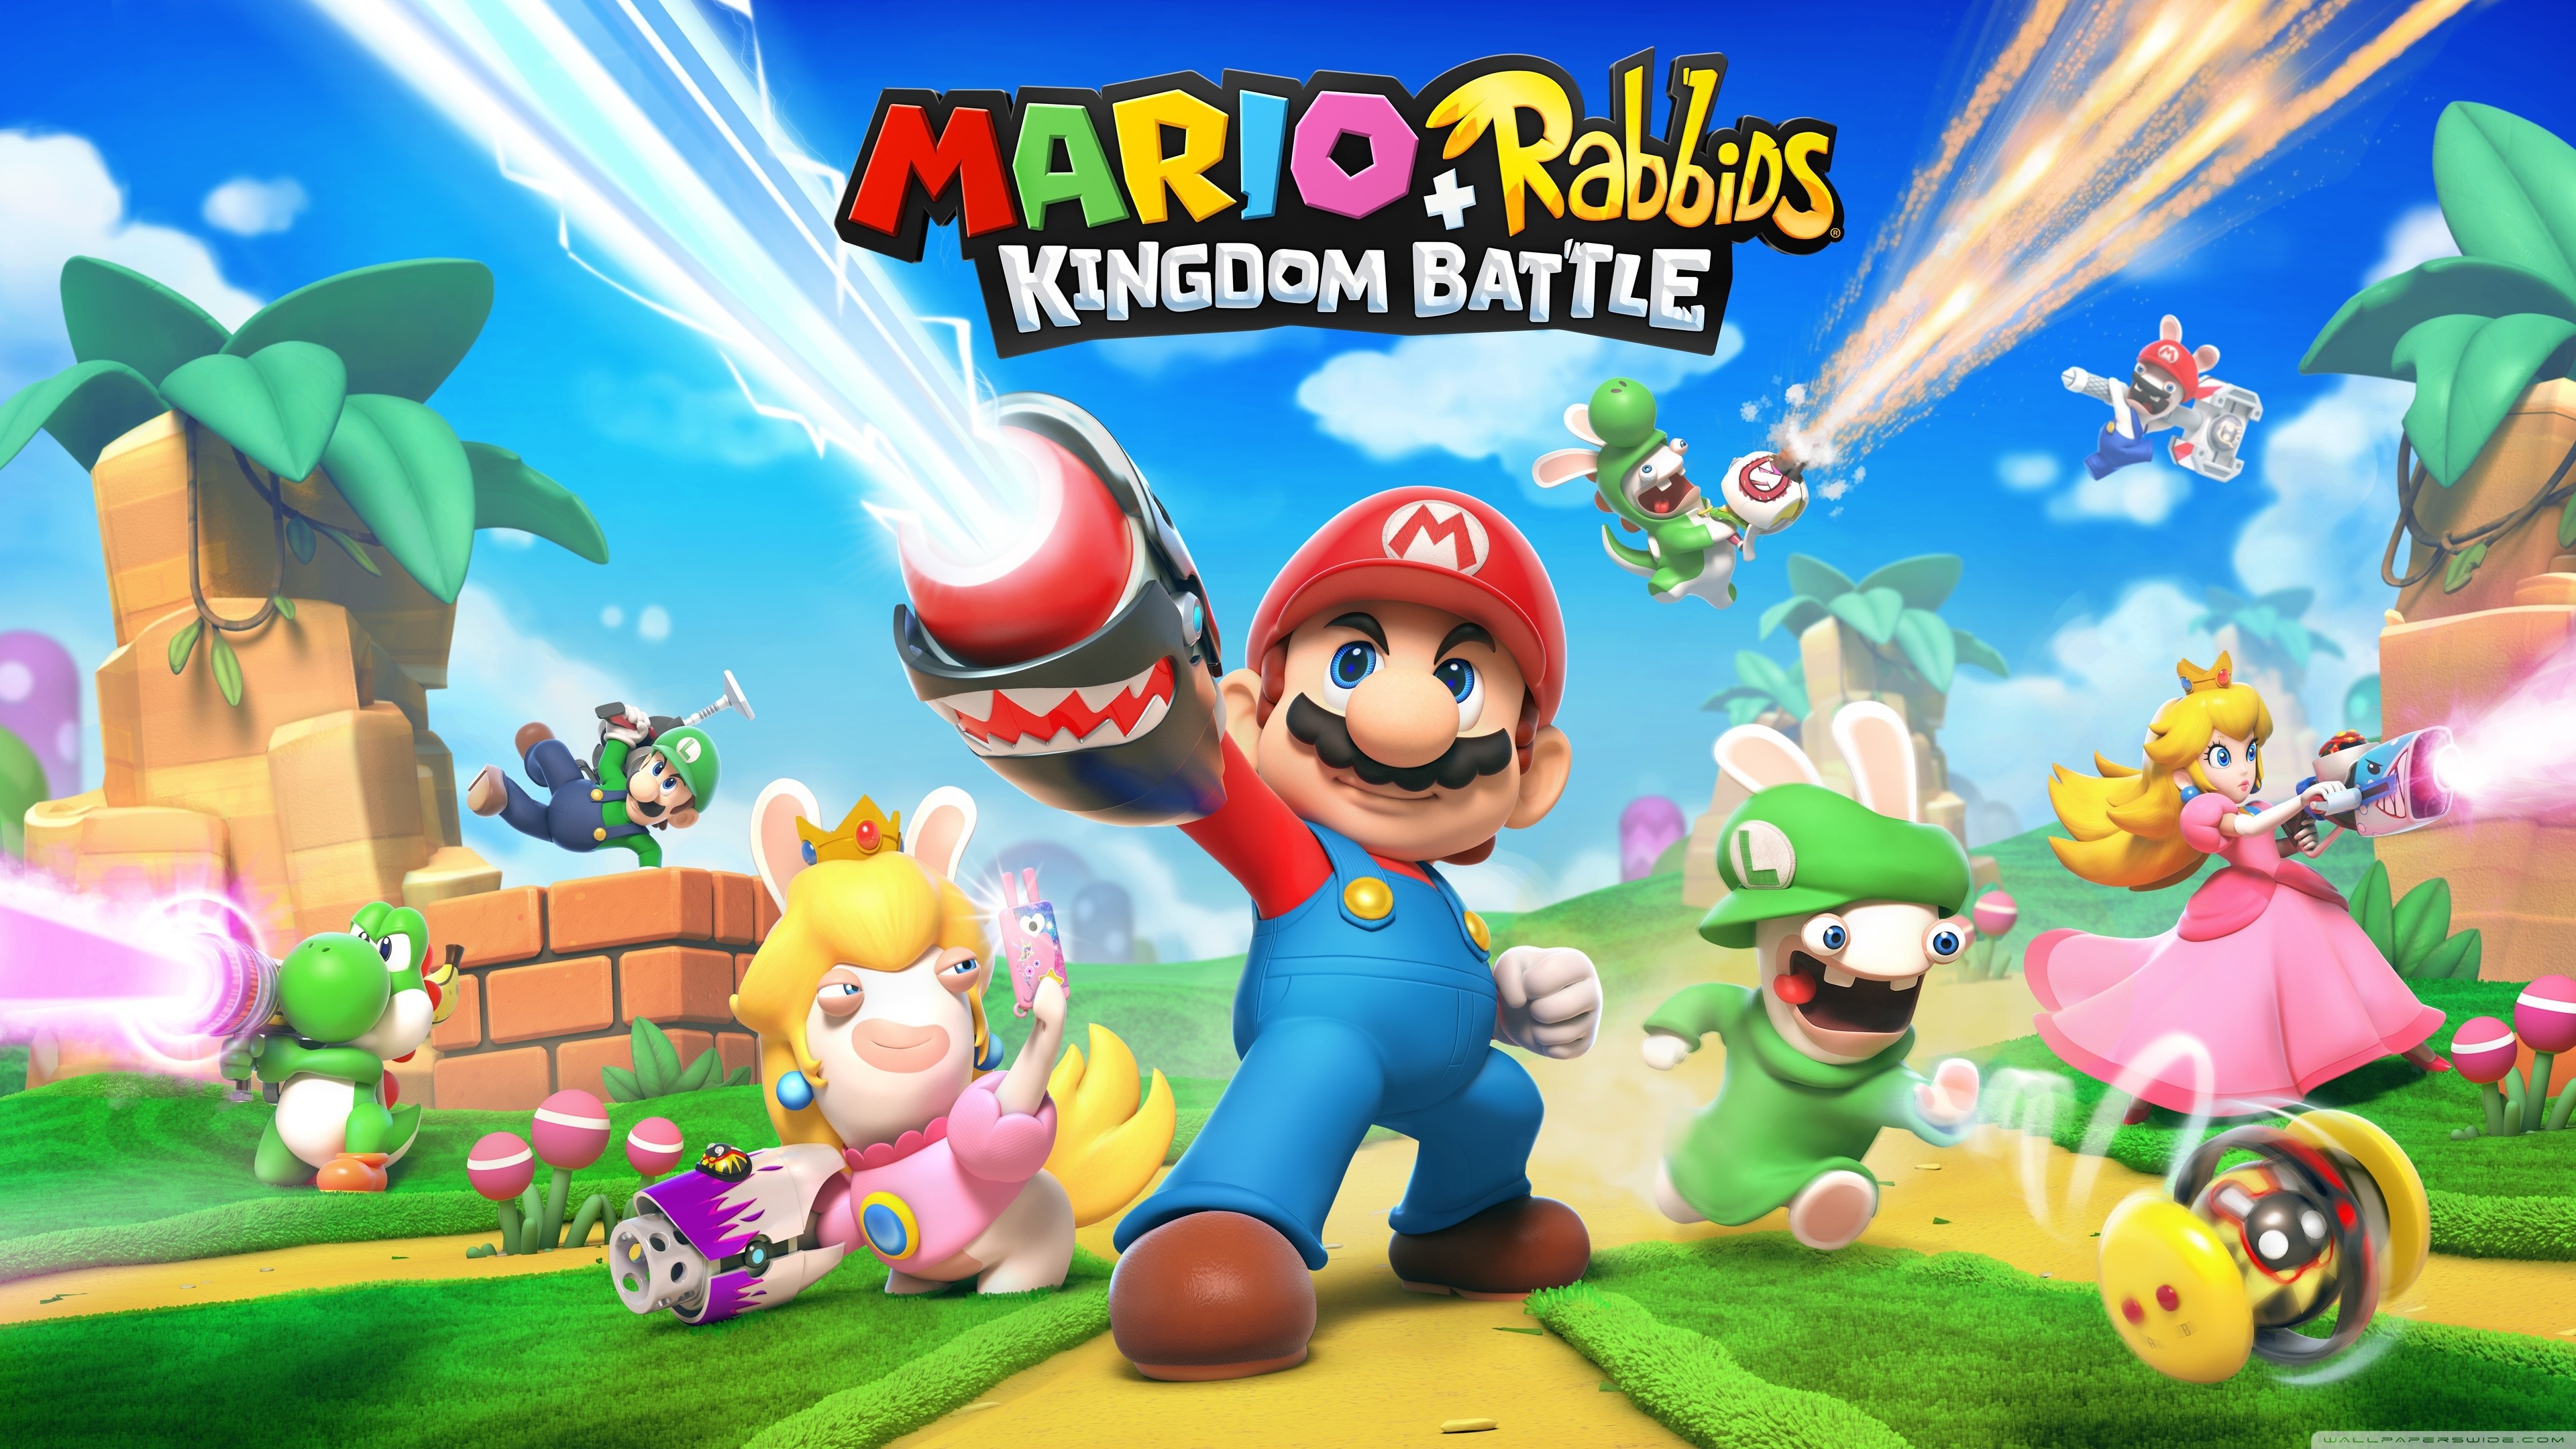 Mario Rabbids Kingdom Battle 2017 game HD Wide Wallpaper for Widescreen